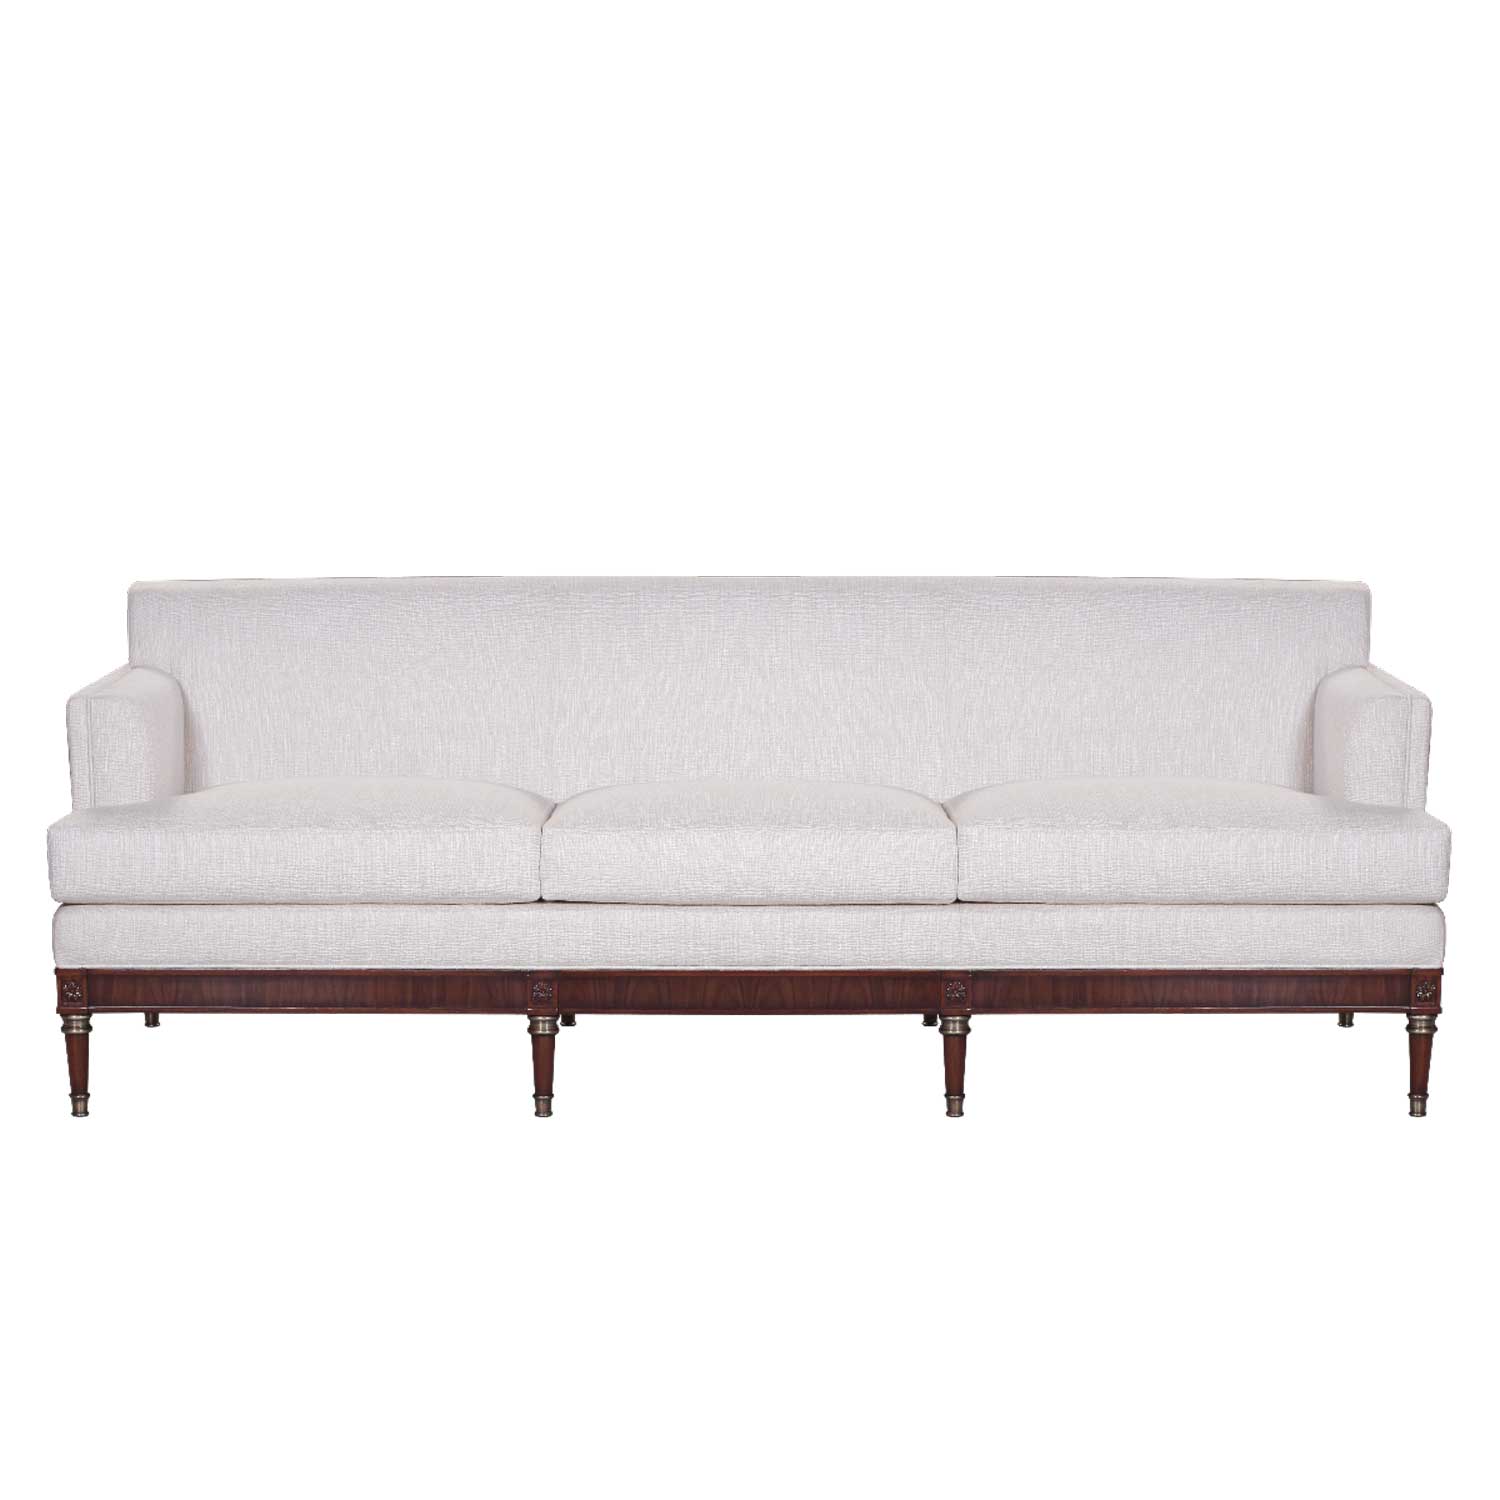 PARMA Dreisitzer Sofa